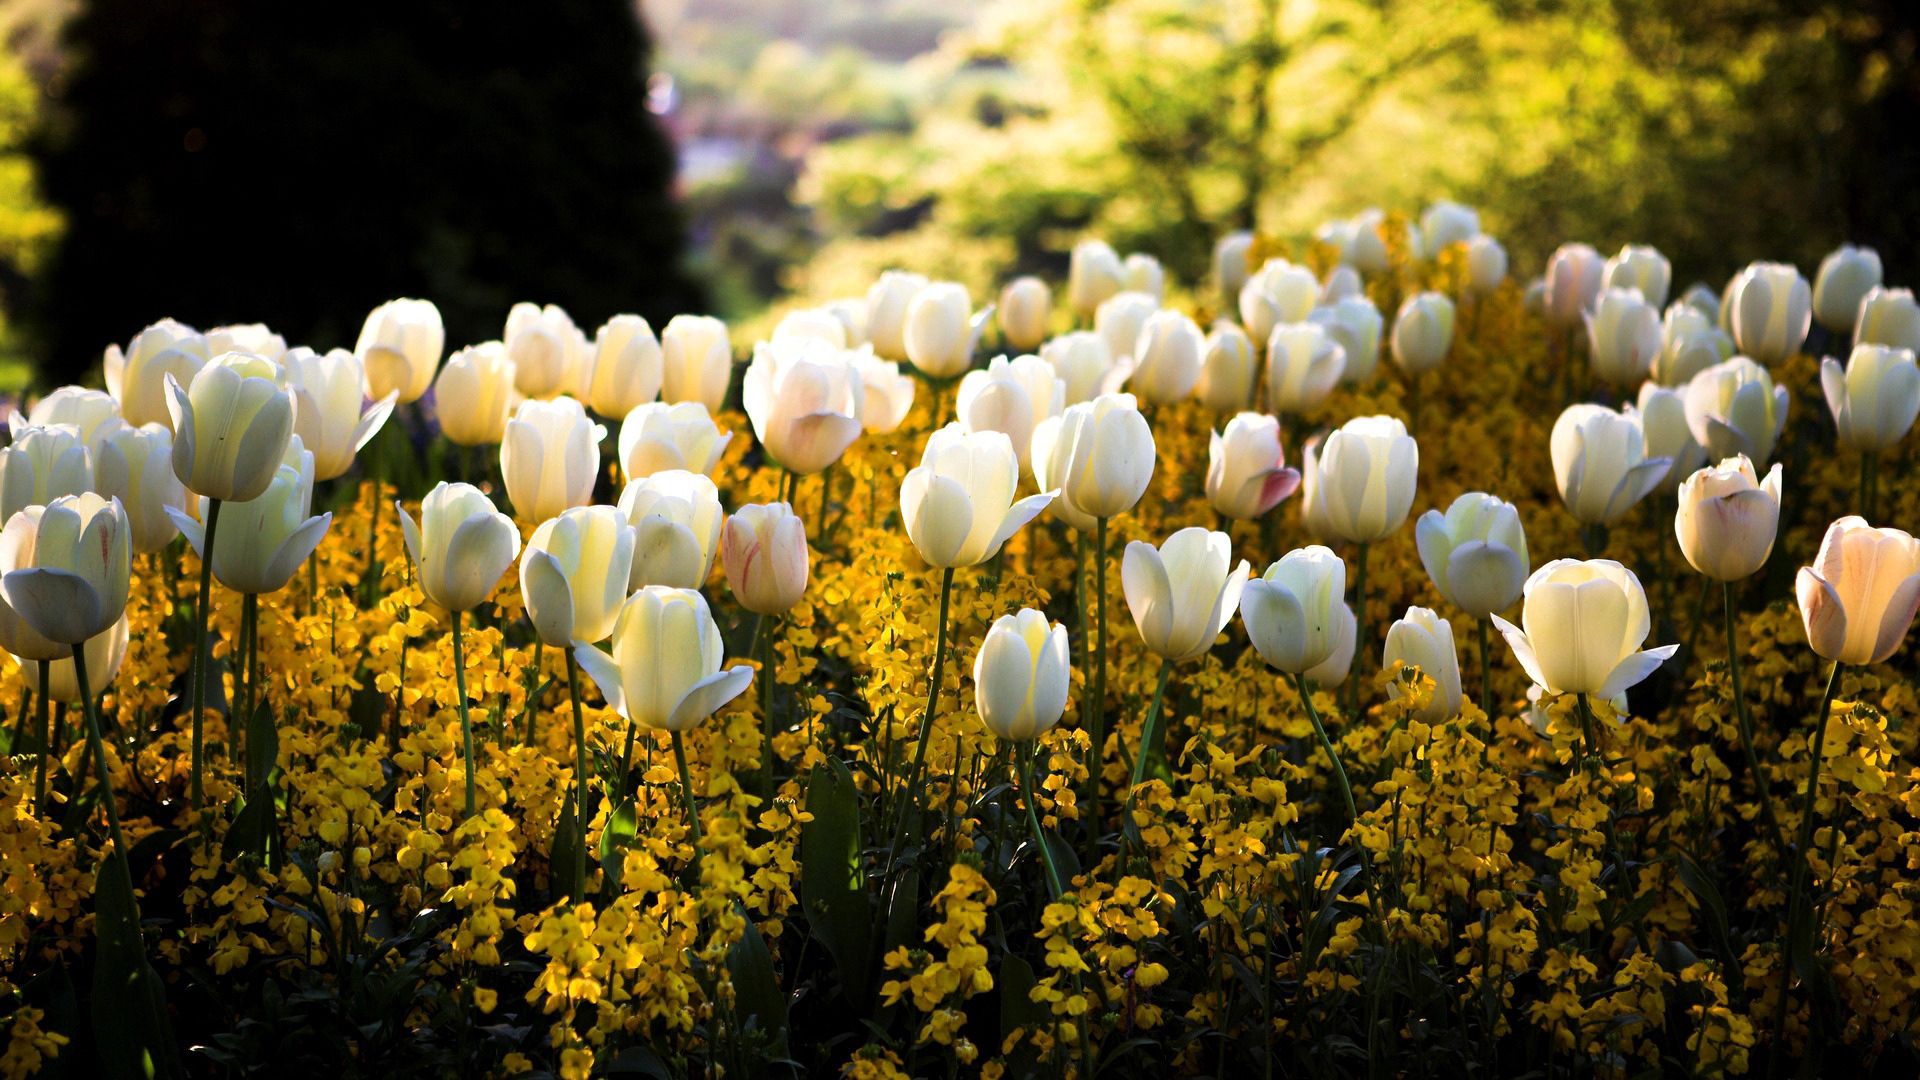 tulips, flowers, park, flower bed, flowerbed, spring wallpaper for mobile